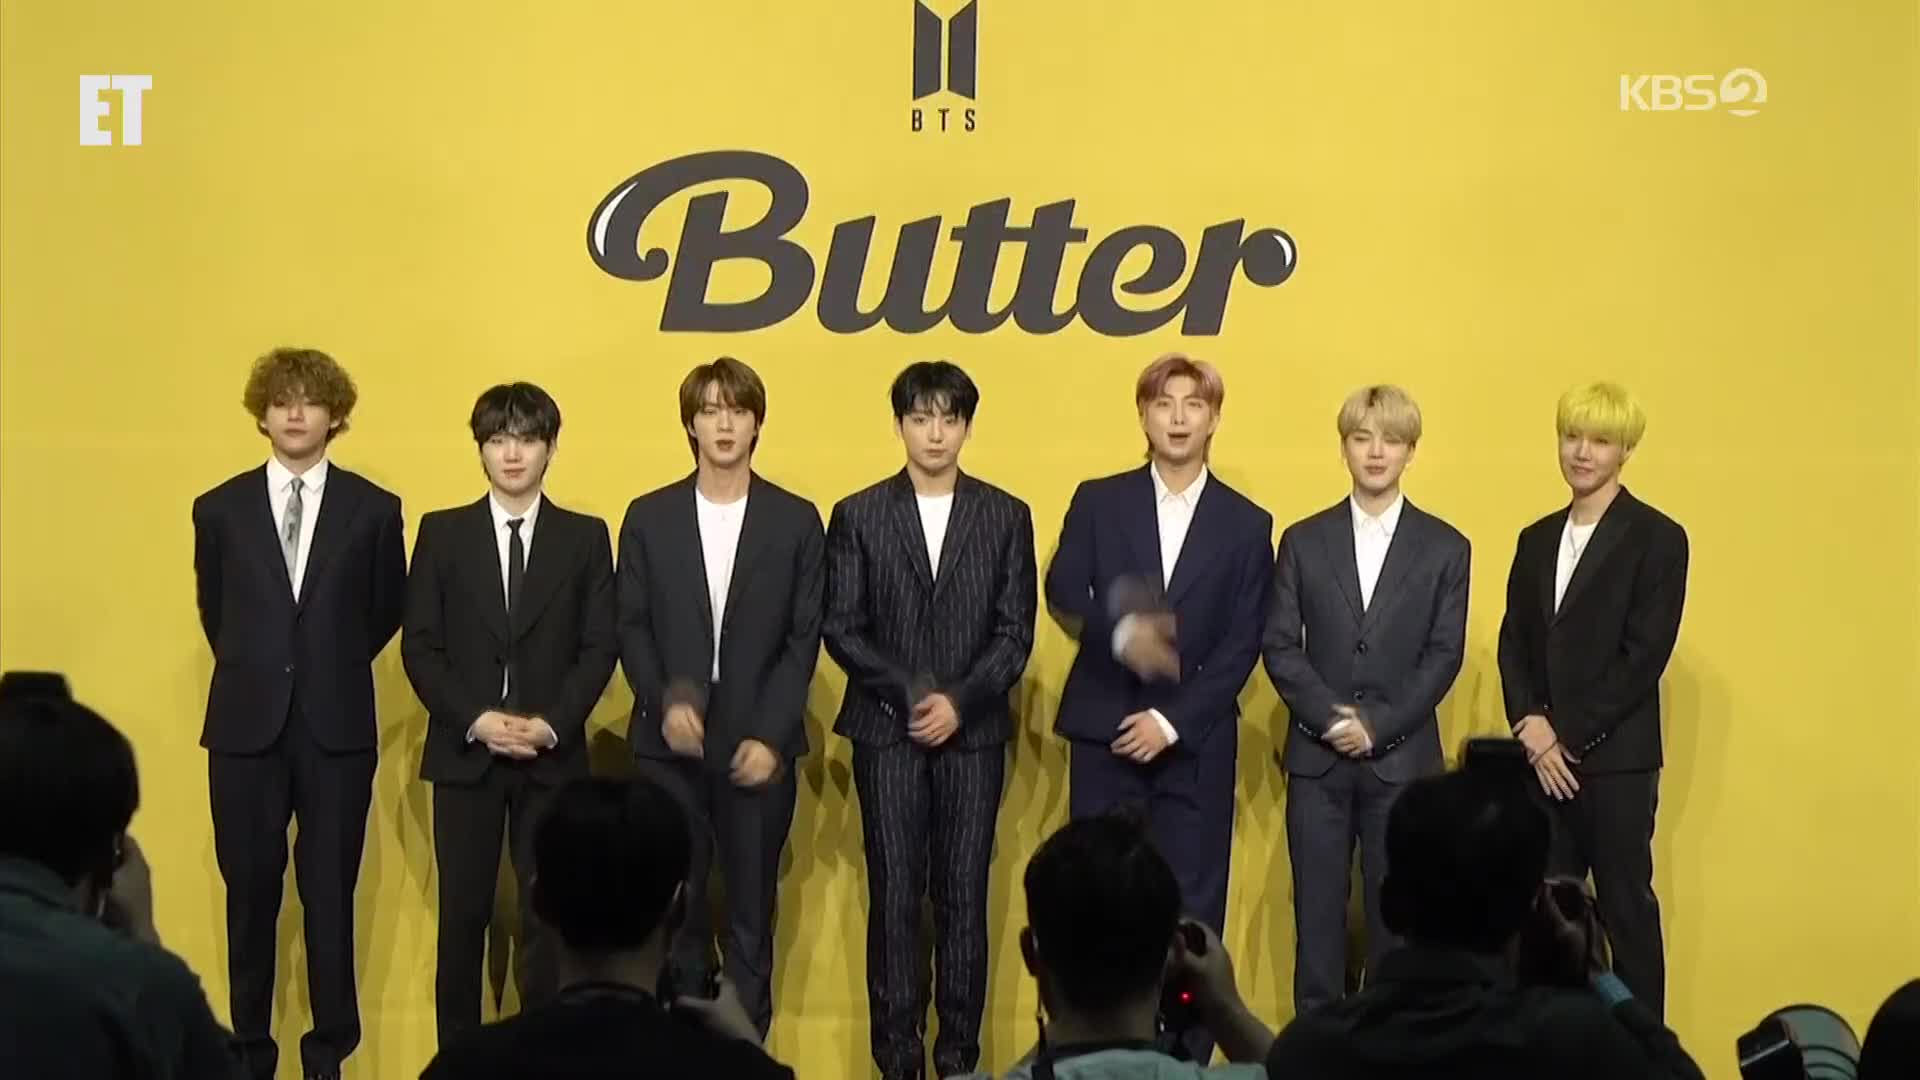 [ET] BTS ‘버터’ 3주 연속 빌보드 정상